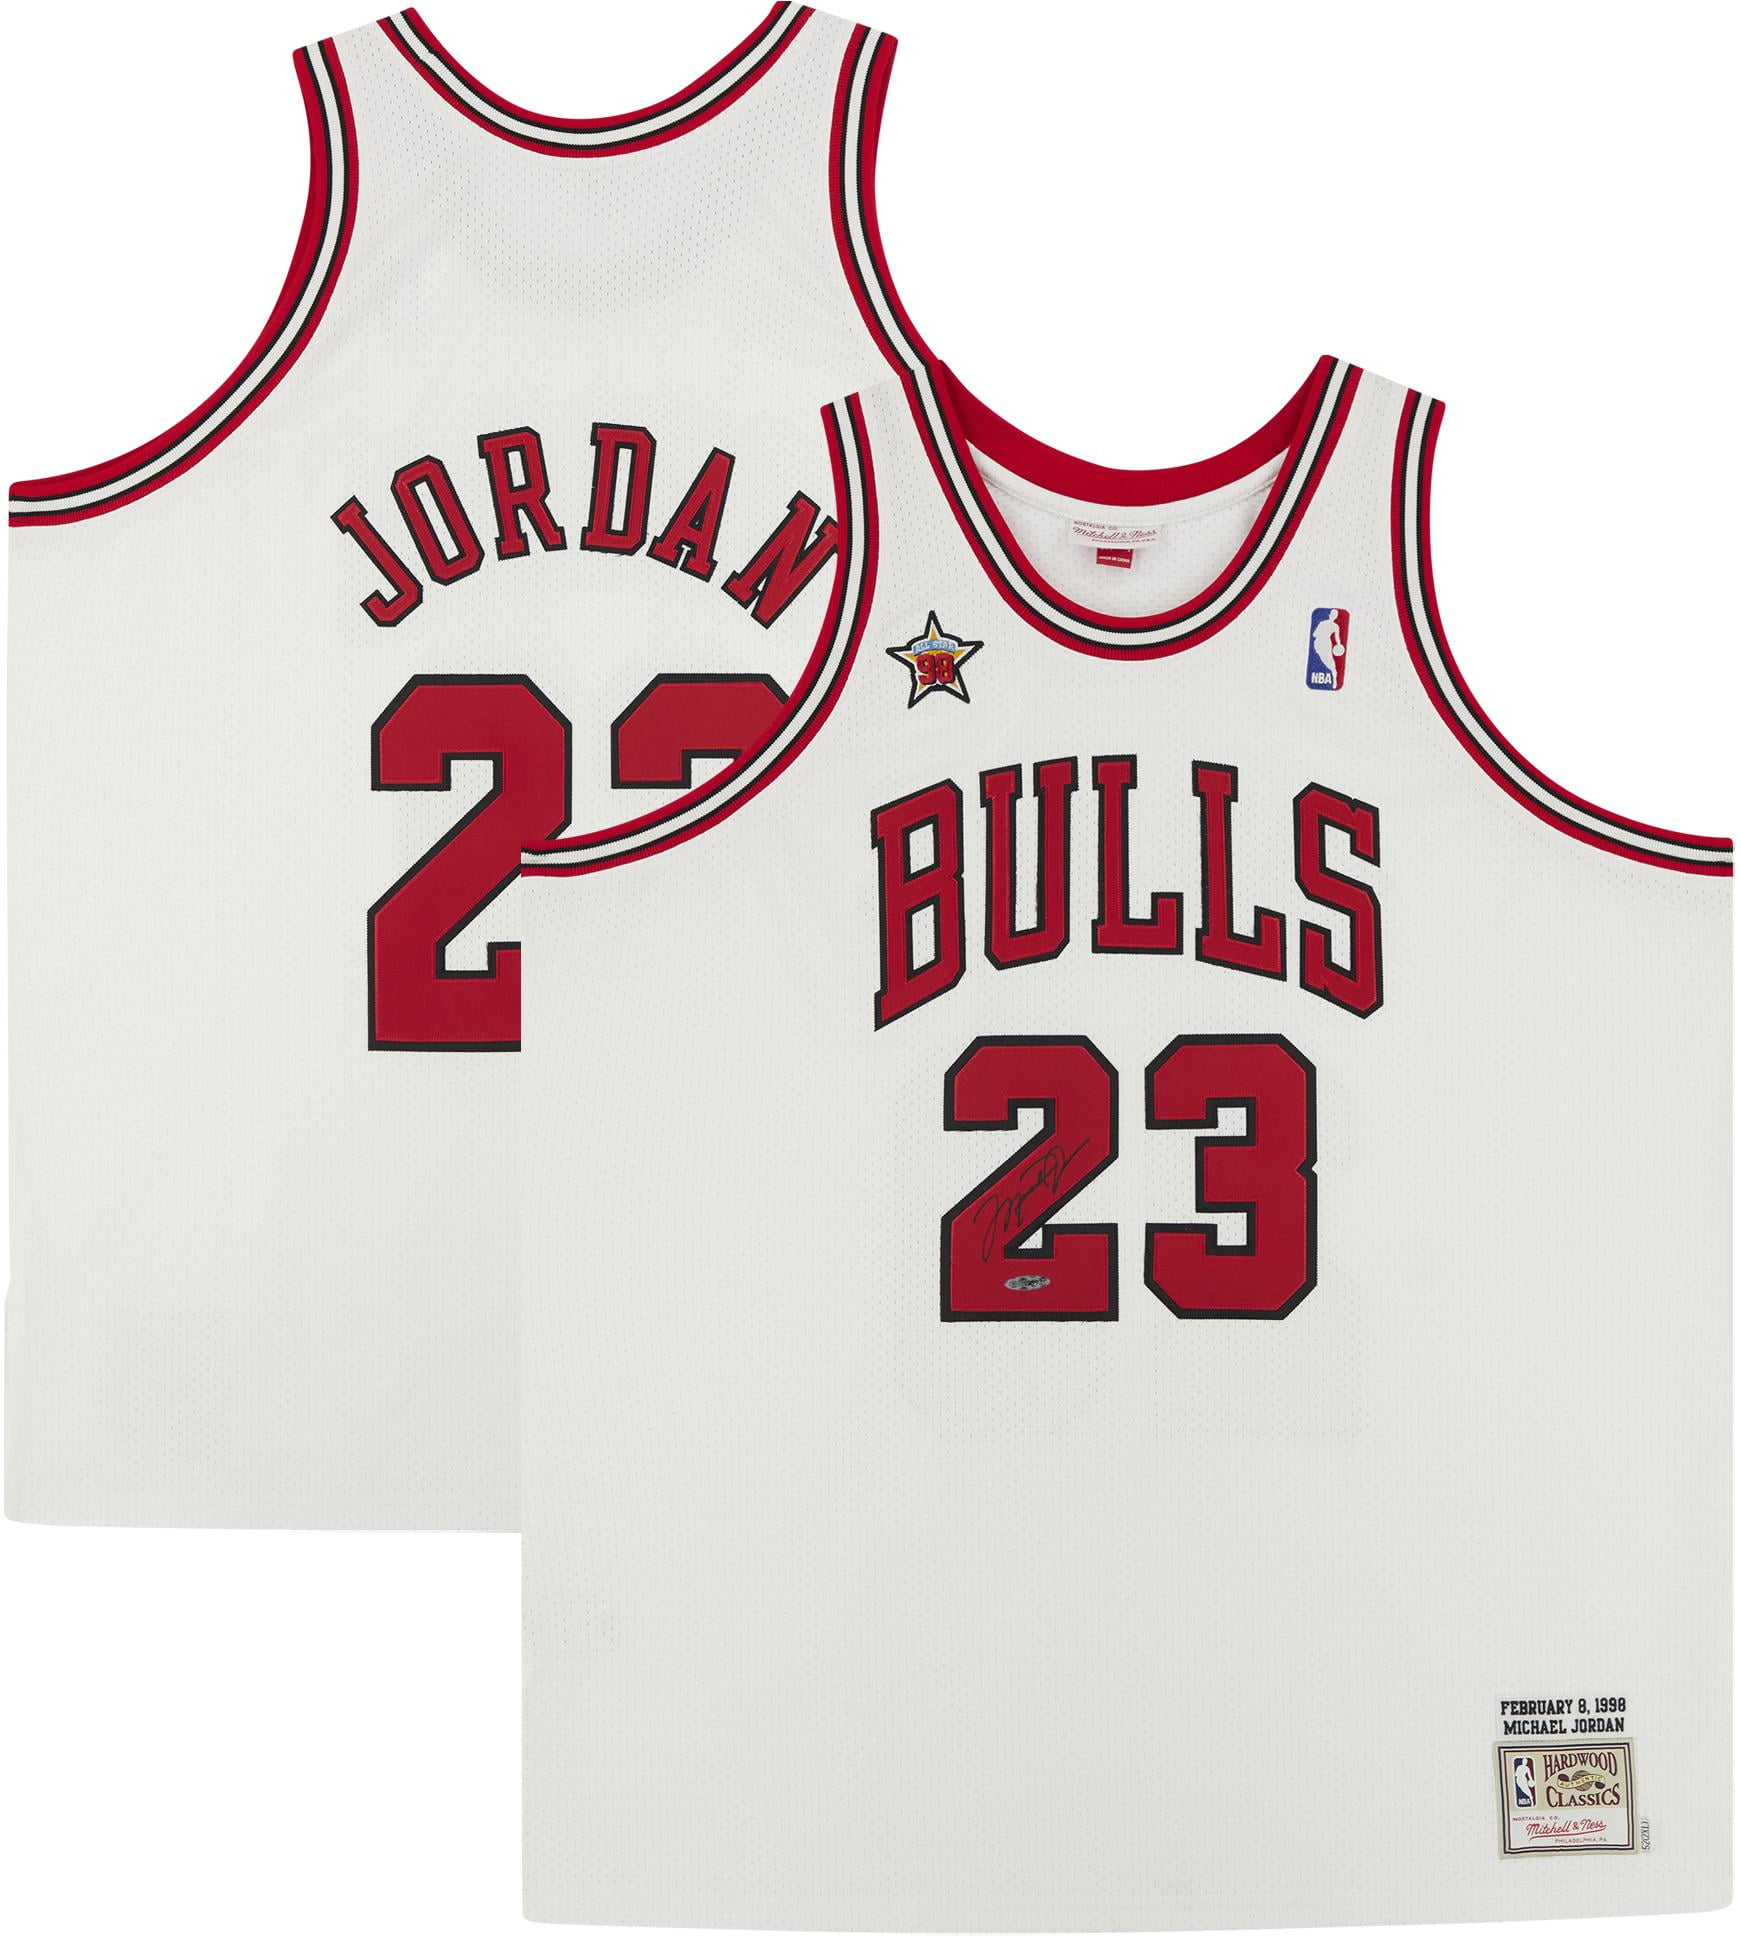 Michael Jordan Chicago Bulls Autographed Black Jersey - Upper Deck